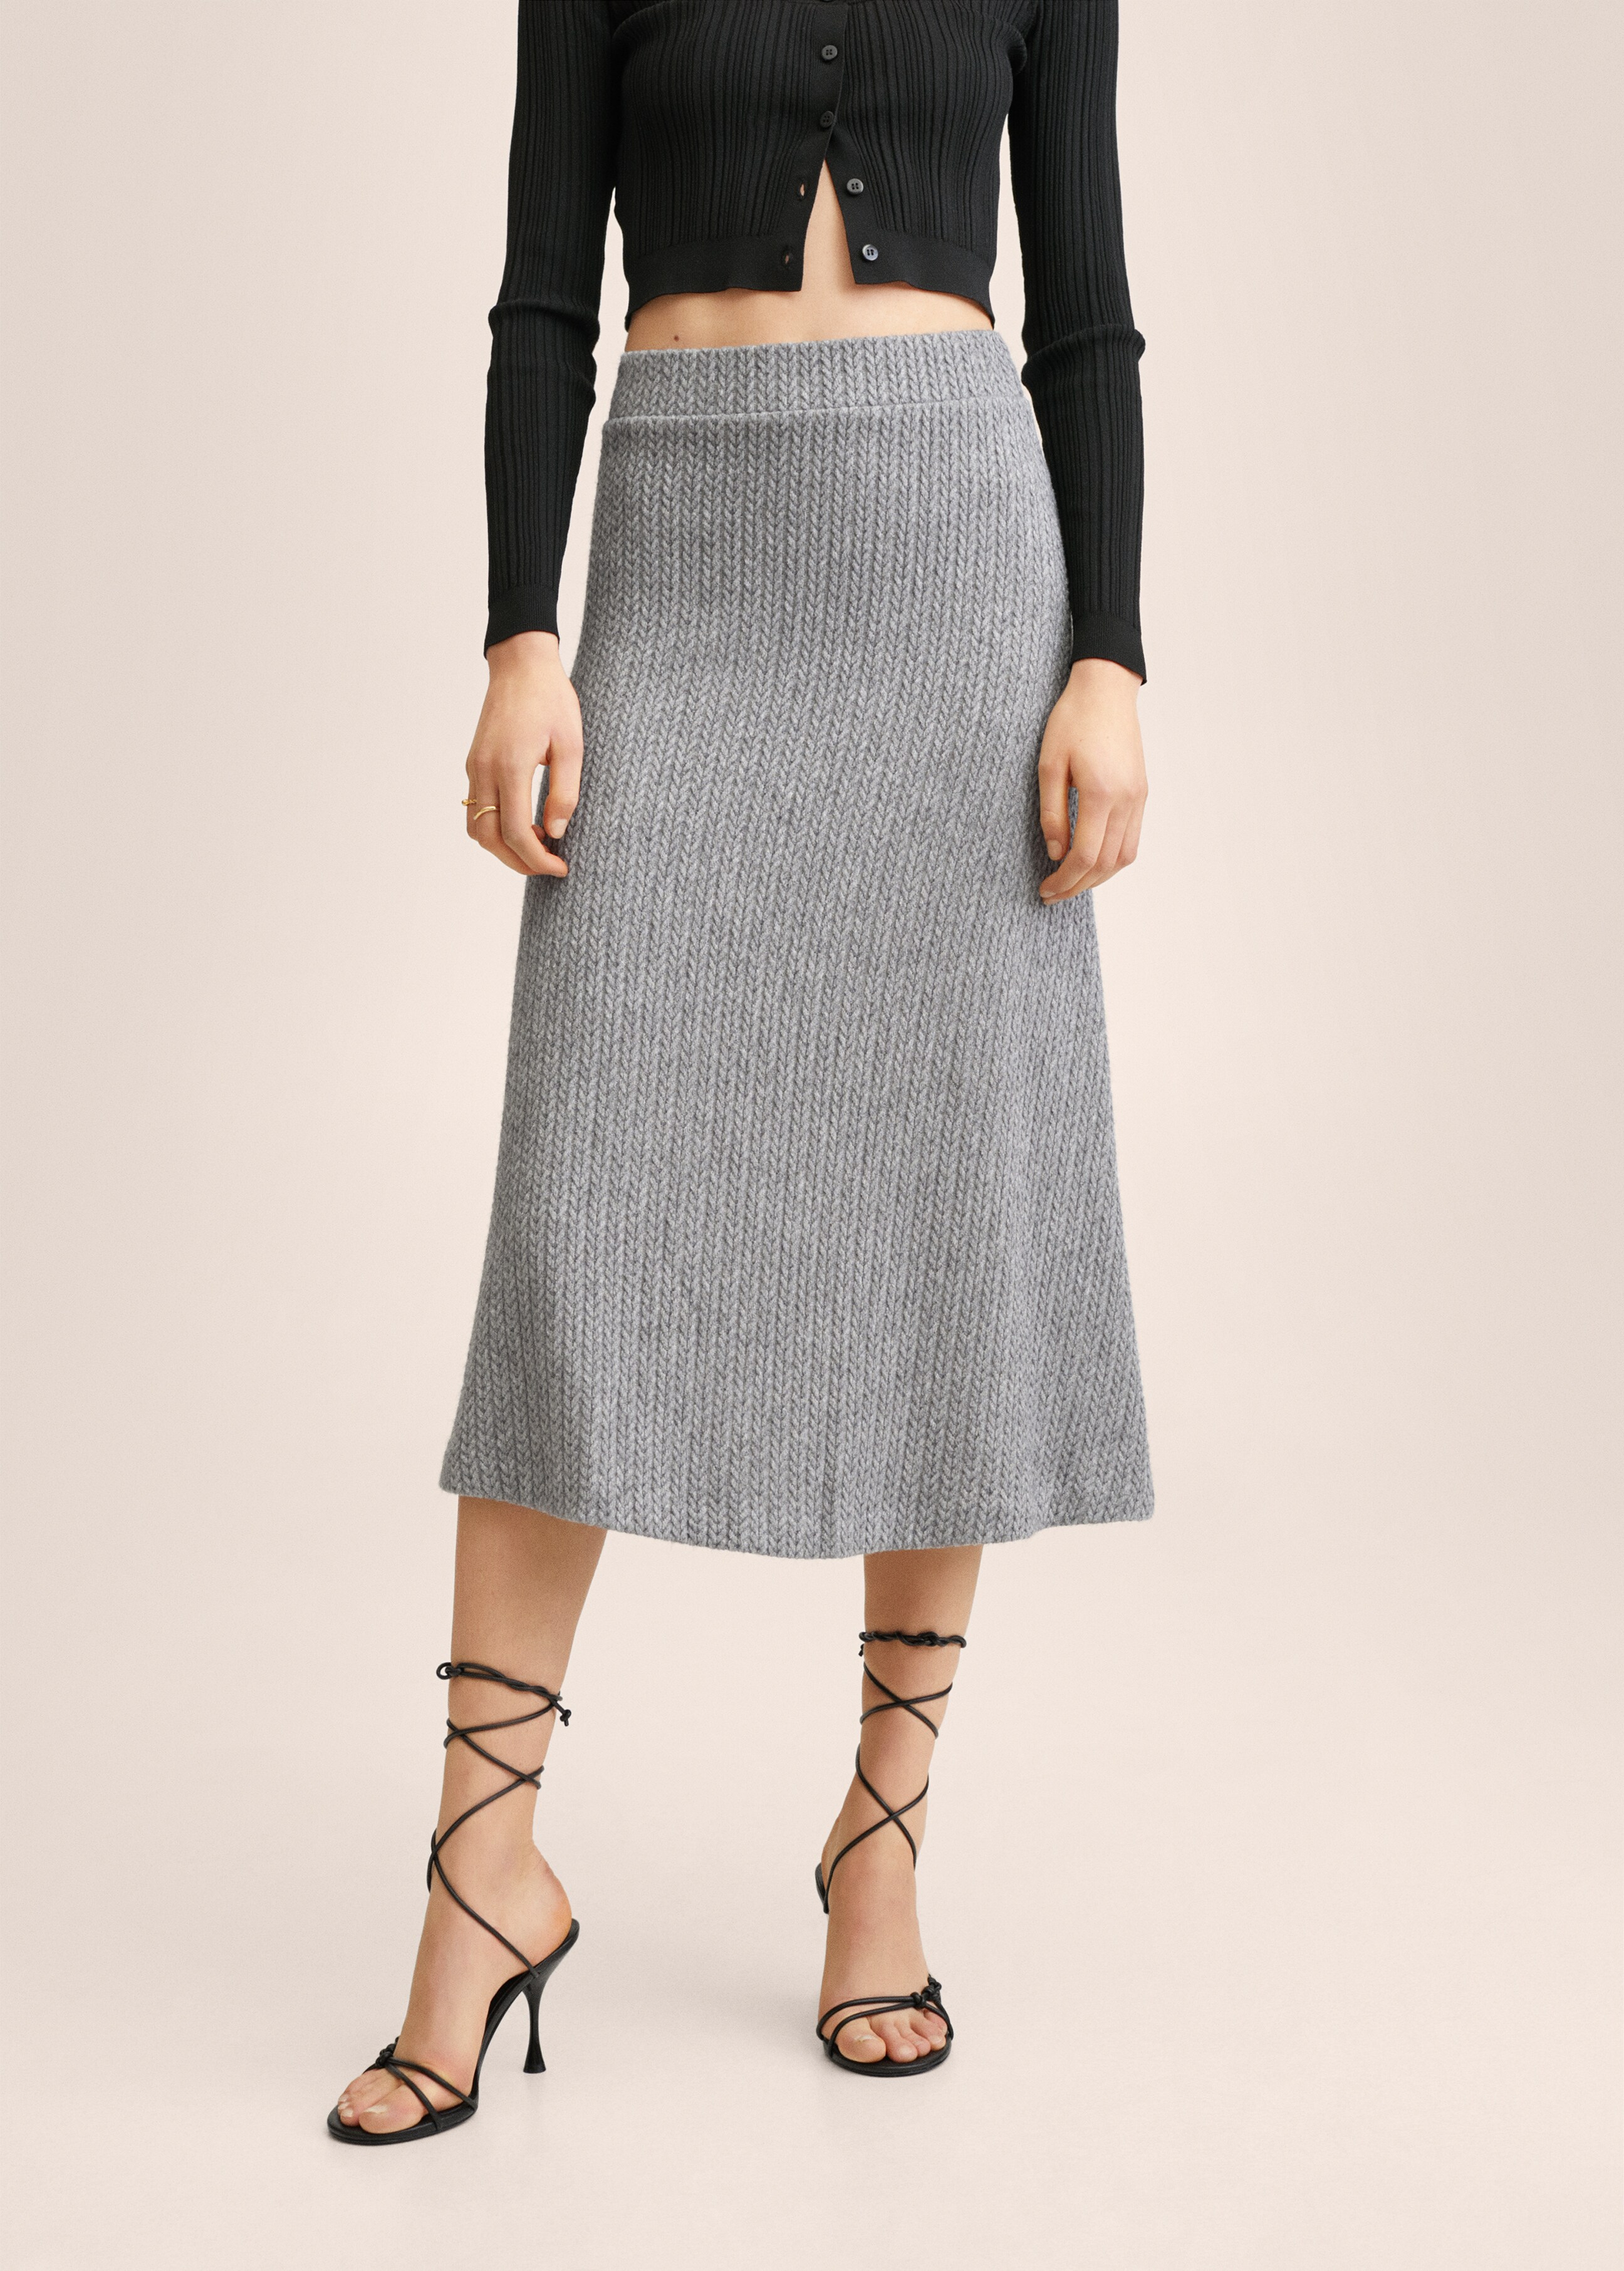 Cable-knit skirt - Medium plane